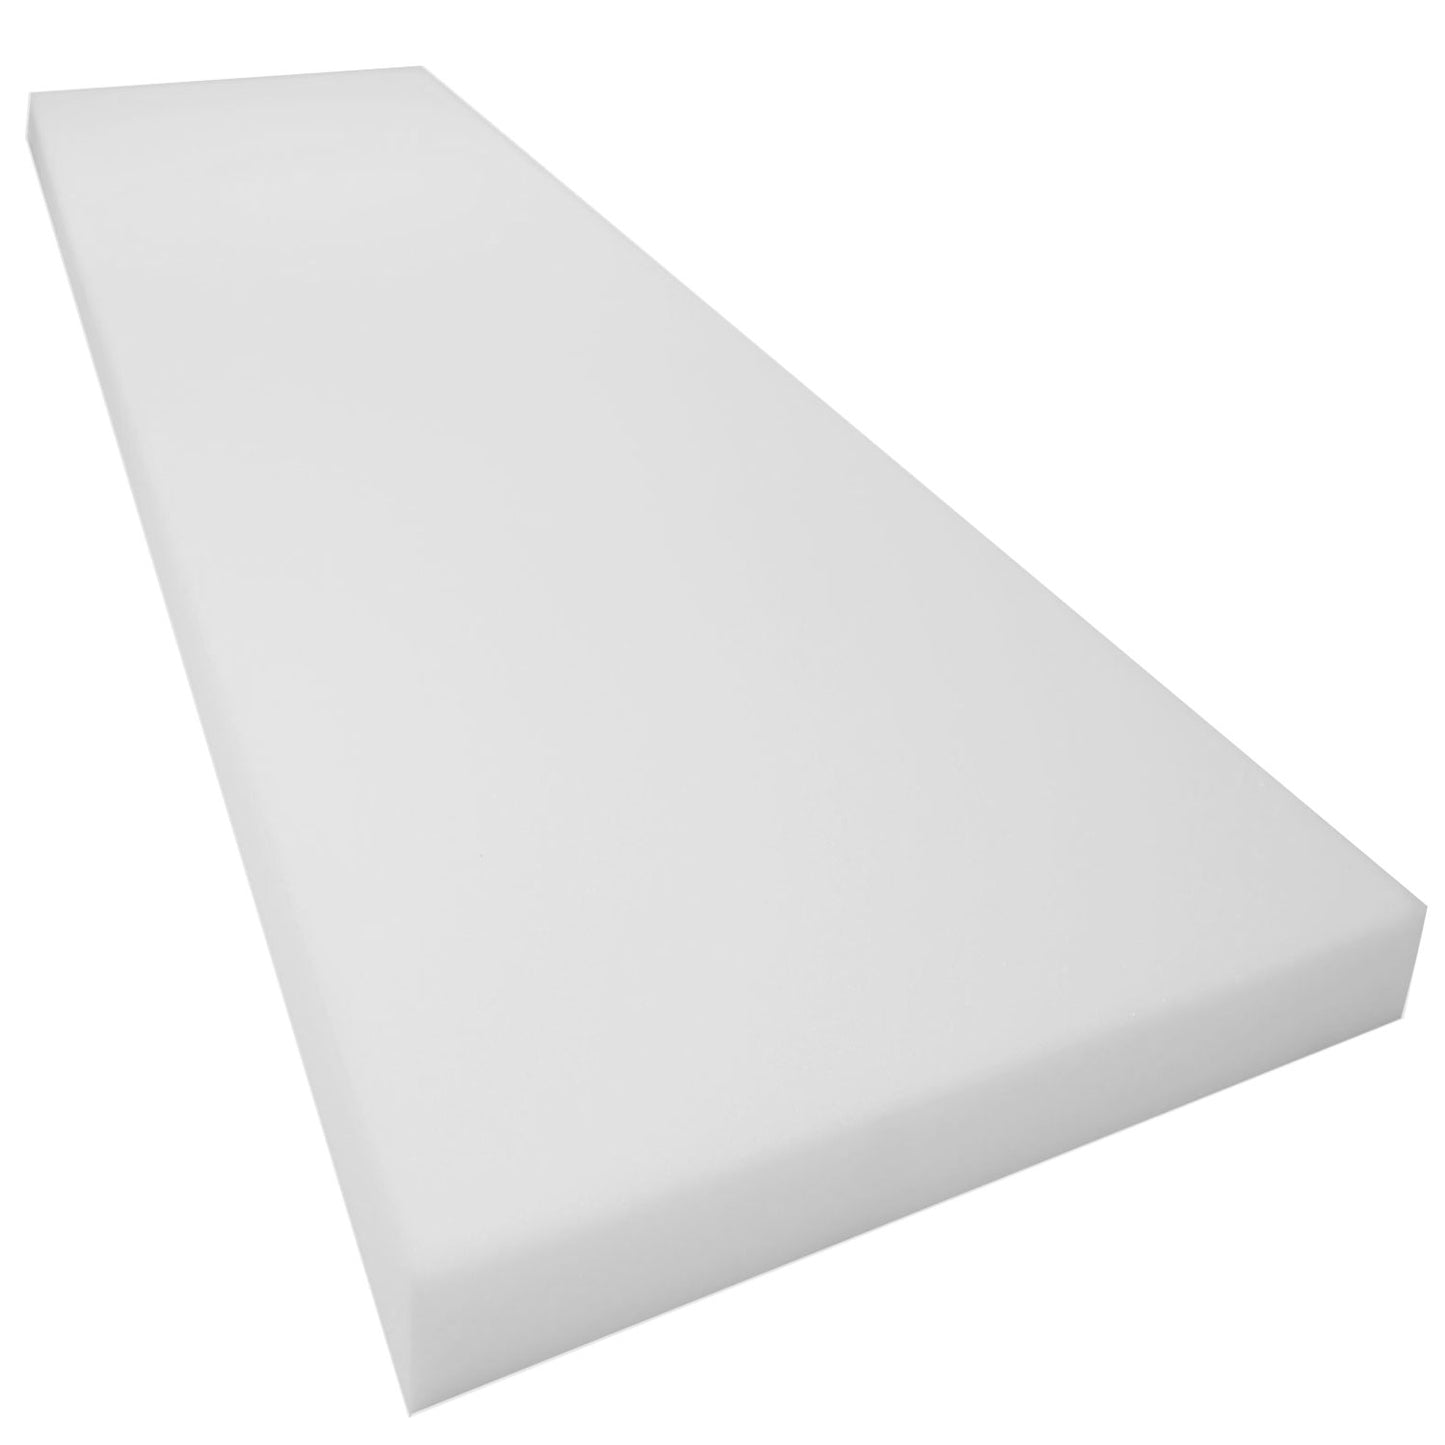 Mybecca 2" x 24"x 24" Upholstery Foam Cushion High Density (Seat Replacement, Upholstery Sheet, Foam Padding)